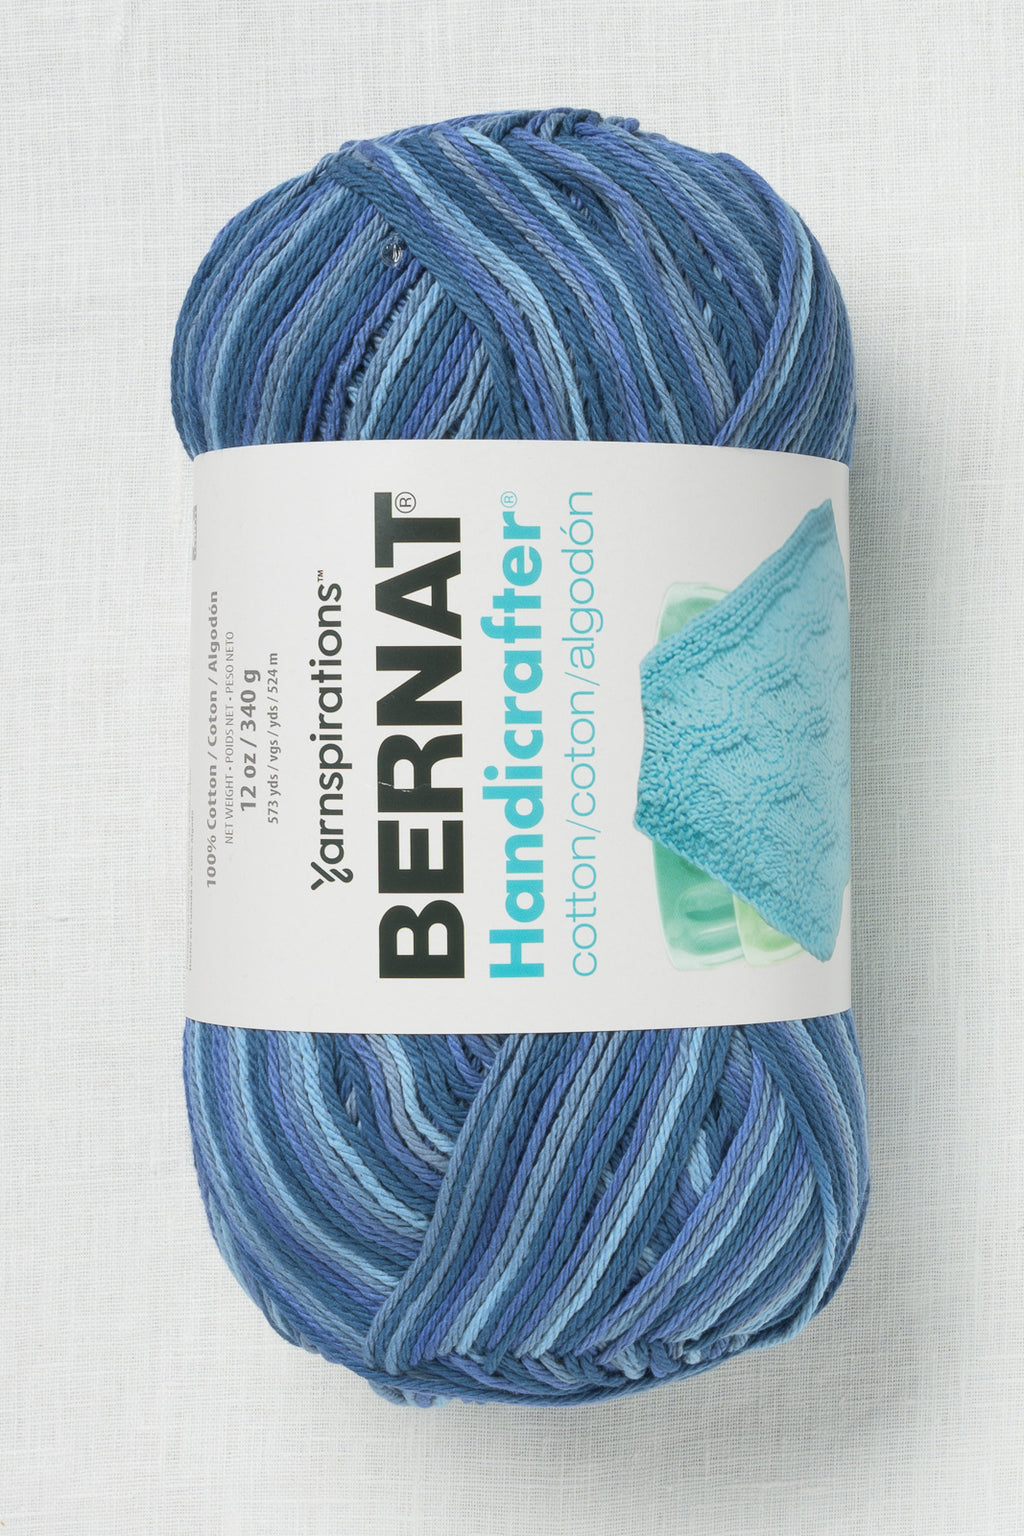 Bernat Handicrafter Cotton Prints and Ombres 340g Blue Camo